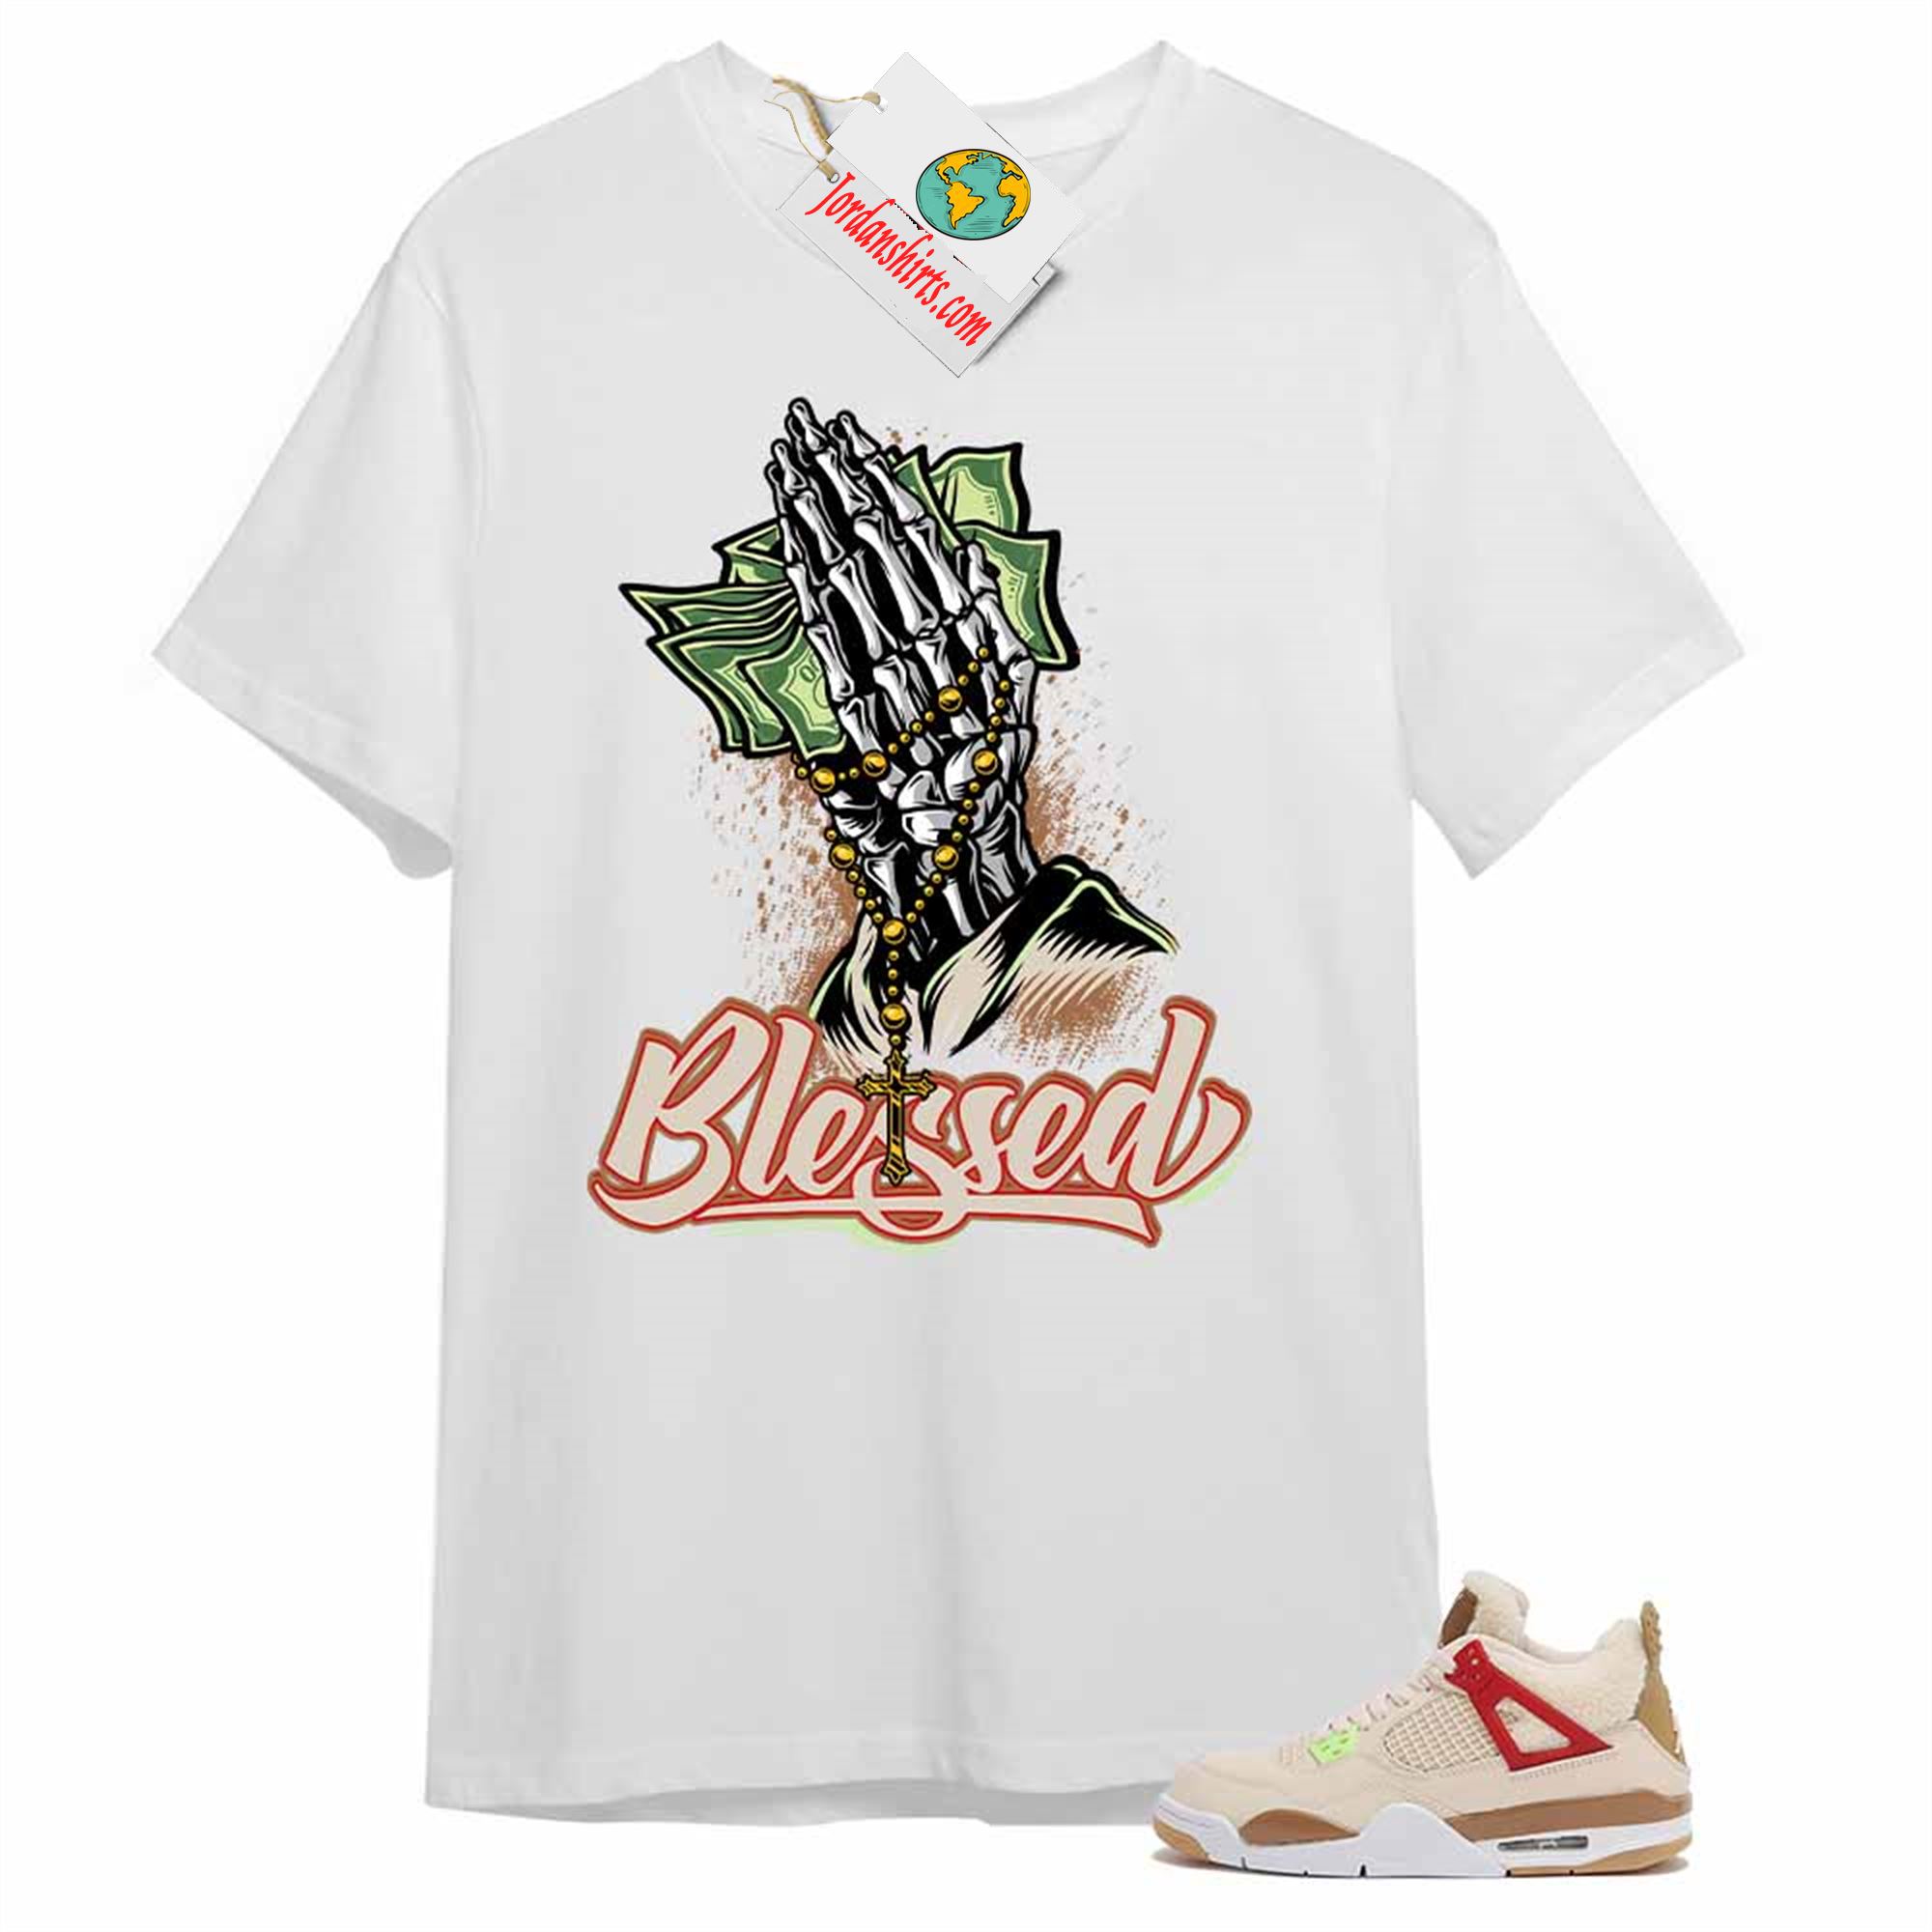 Jordan 4 Shirt, Blessed Pray Hand Money White Air Jordan 4 Wild Things 4s Size Up To 5xl